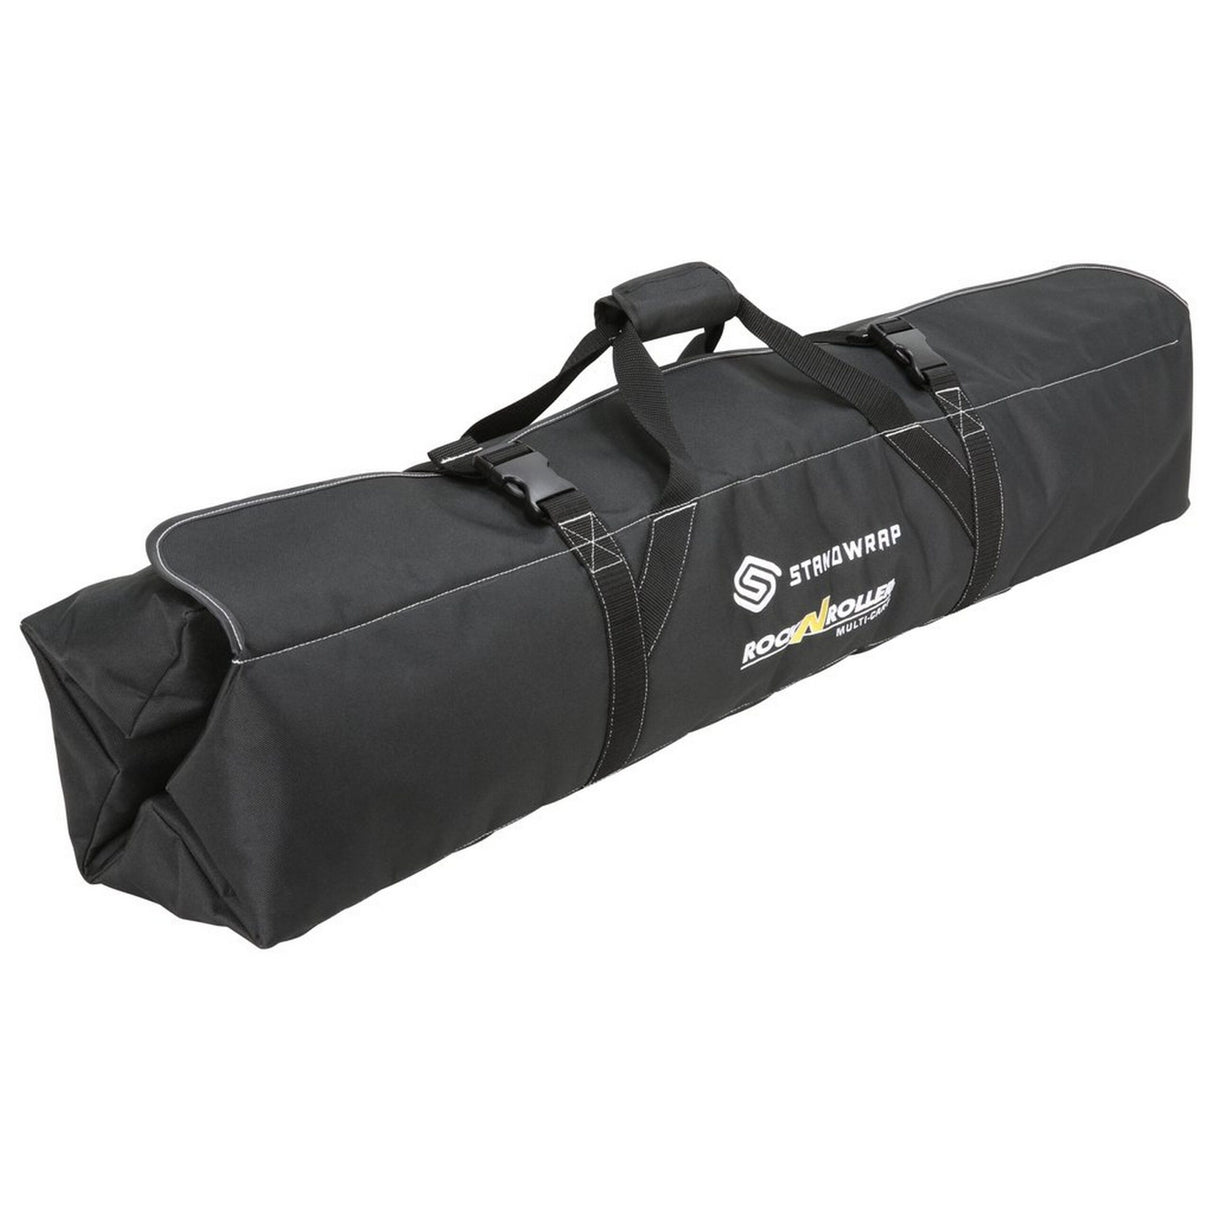 RockNRoller RSA-SWSM Standwrap 4-Pocket Roll Up Accessory Bag, Small, 36 Pocket Length